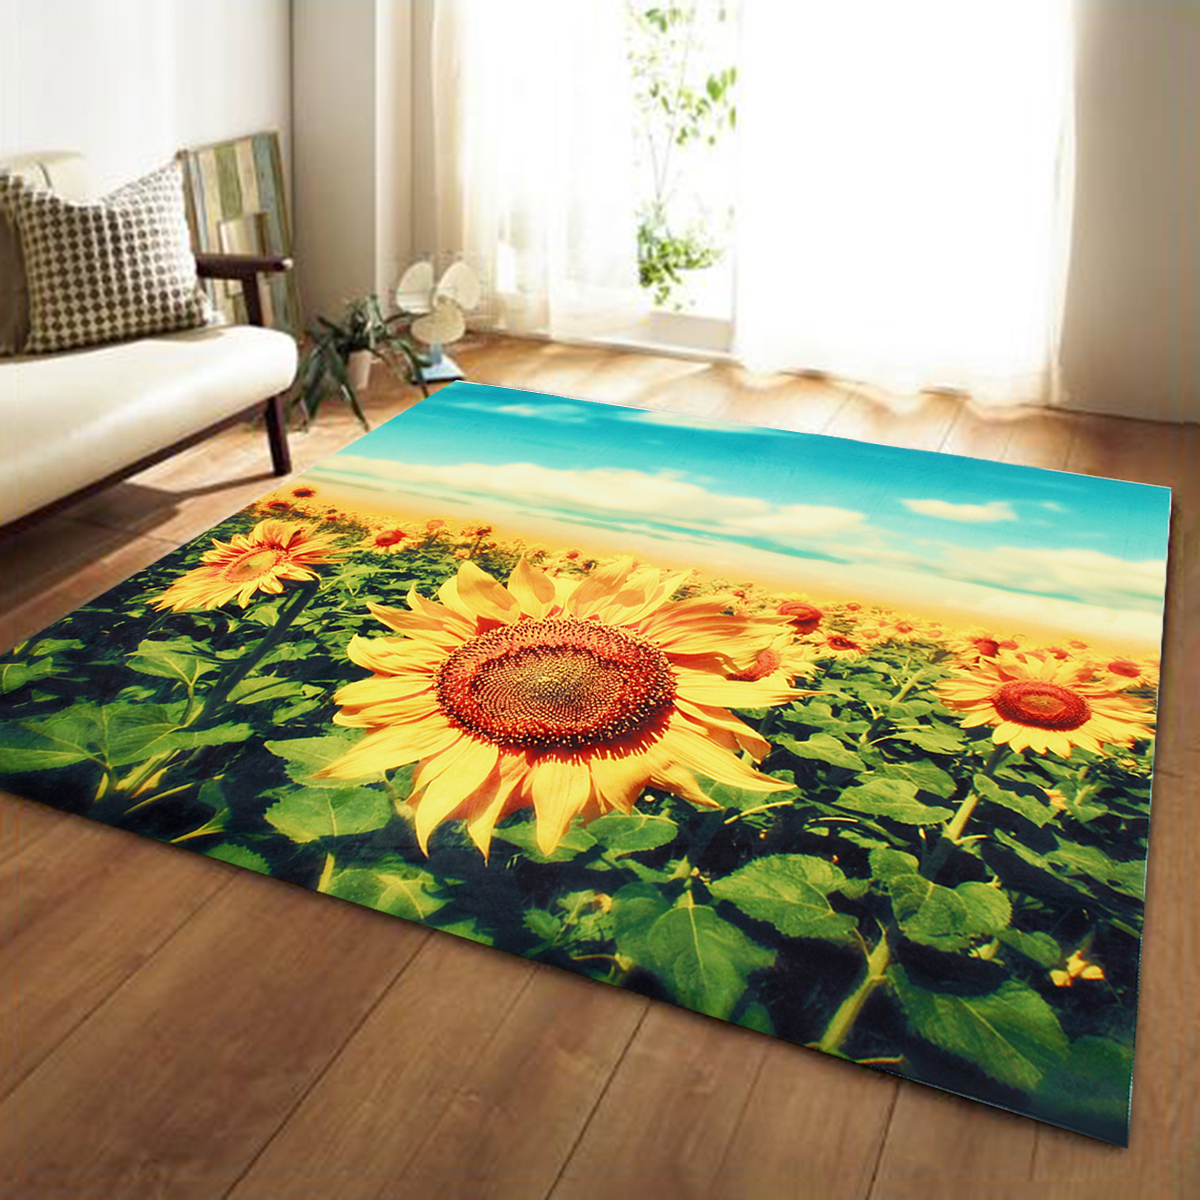 Gold-Sunflower-Area-Floor-Rug-Carpet-For-Bedroom-Living-Room-Home-Decoration-1404118-7